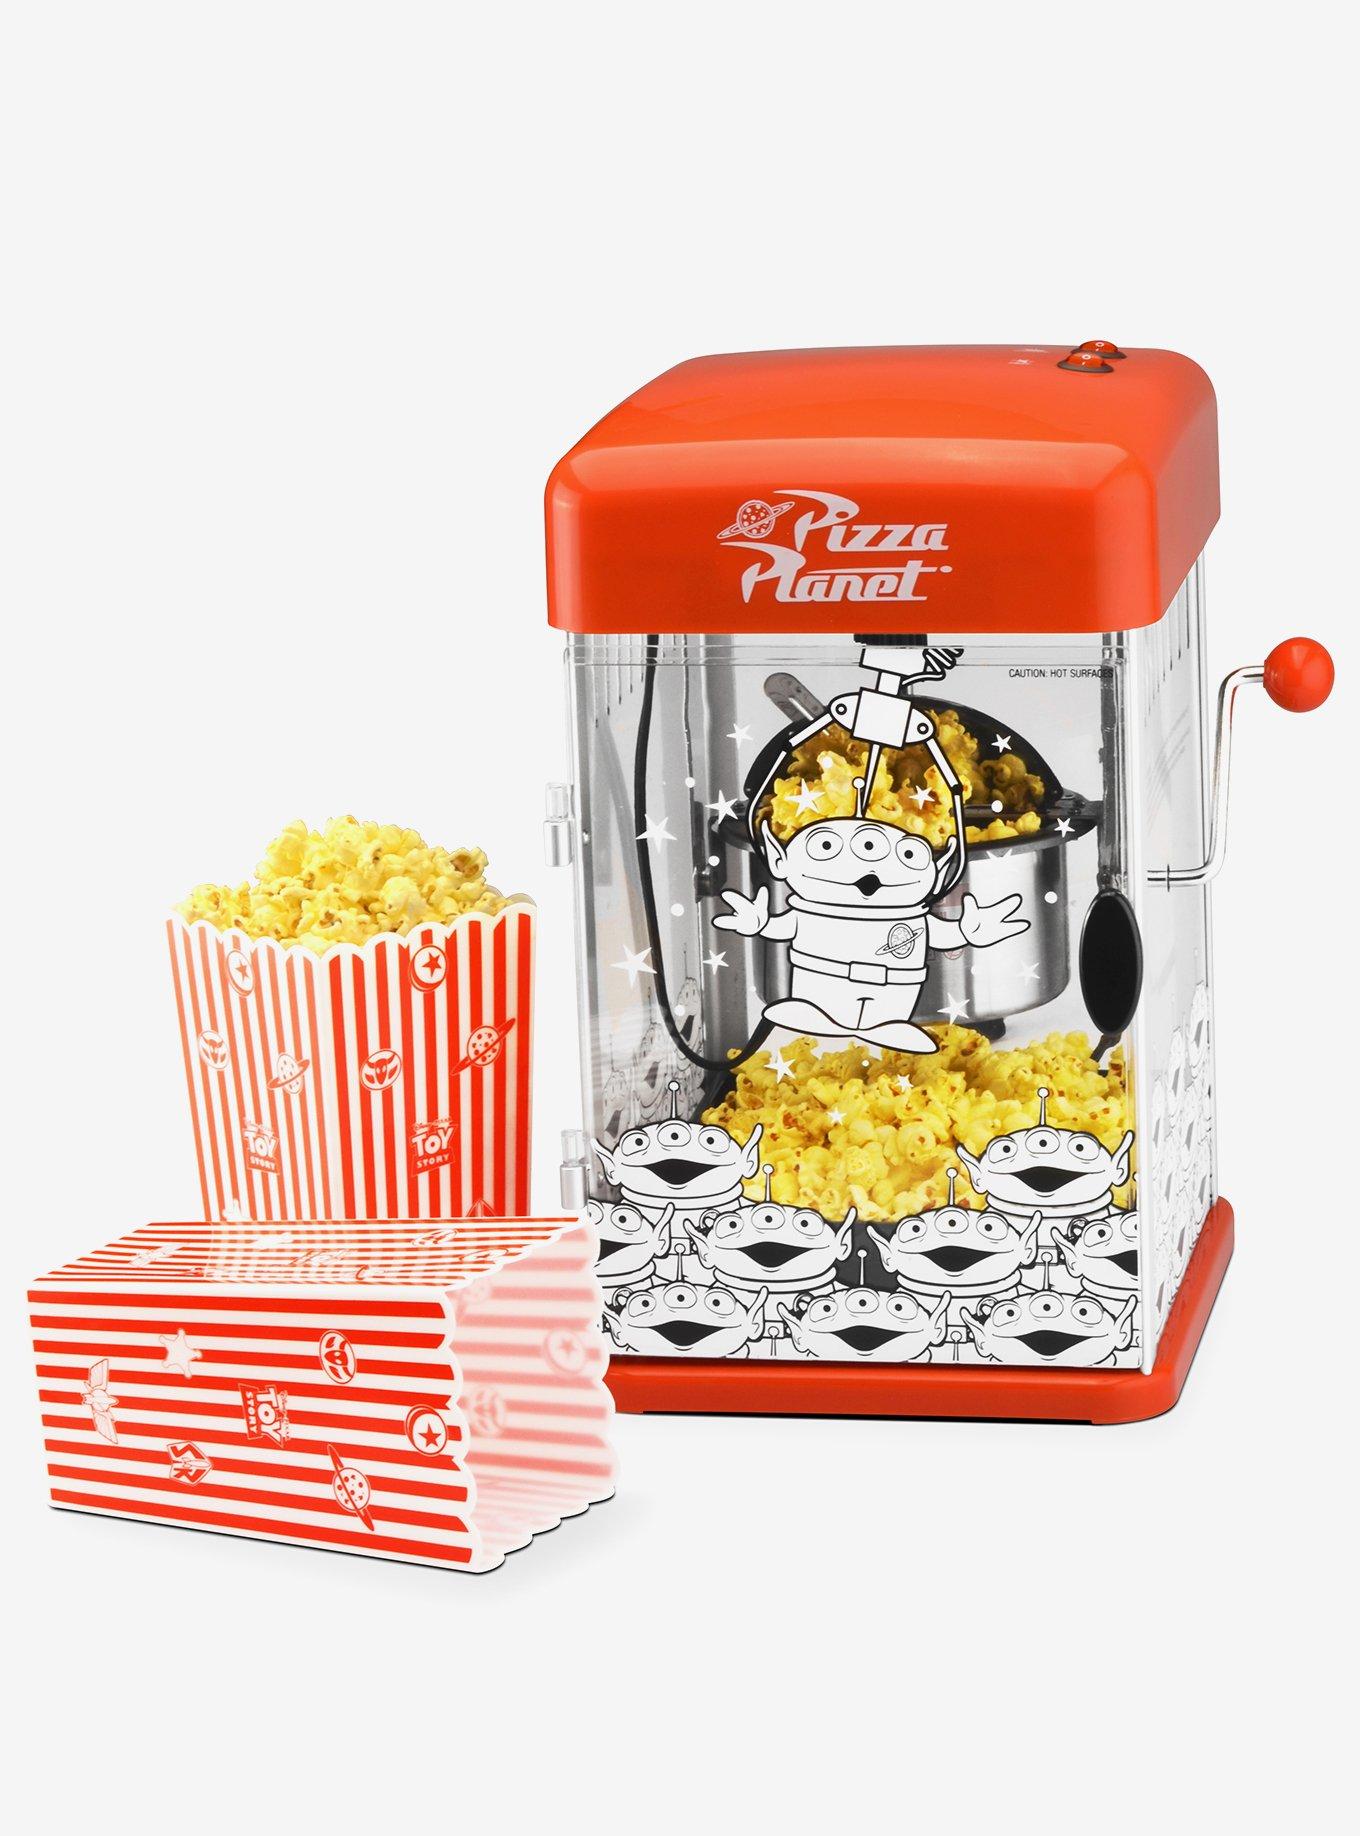 Disney Mickey Mouse Kettle-Style Popcorn Popper, BoxLunch